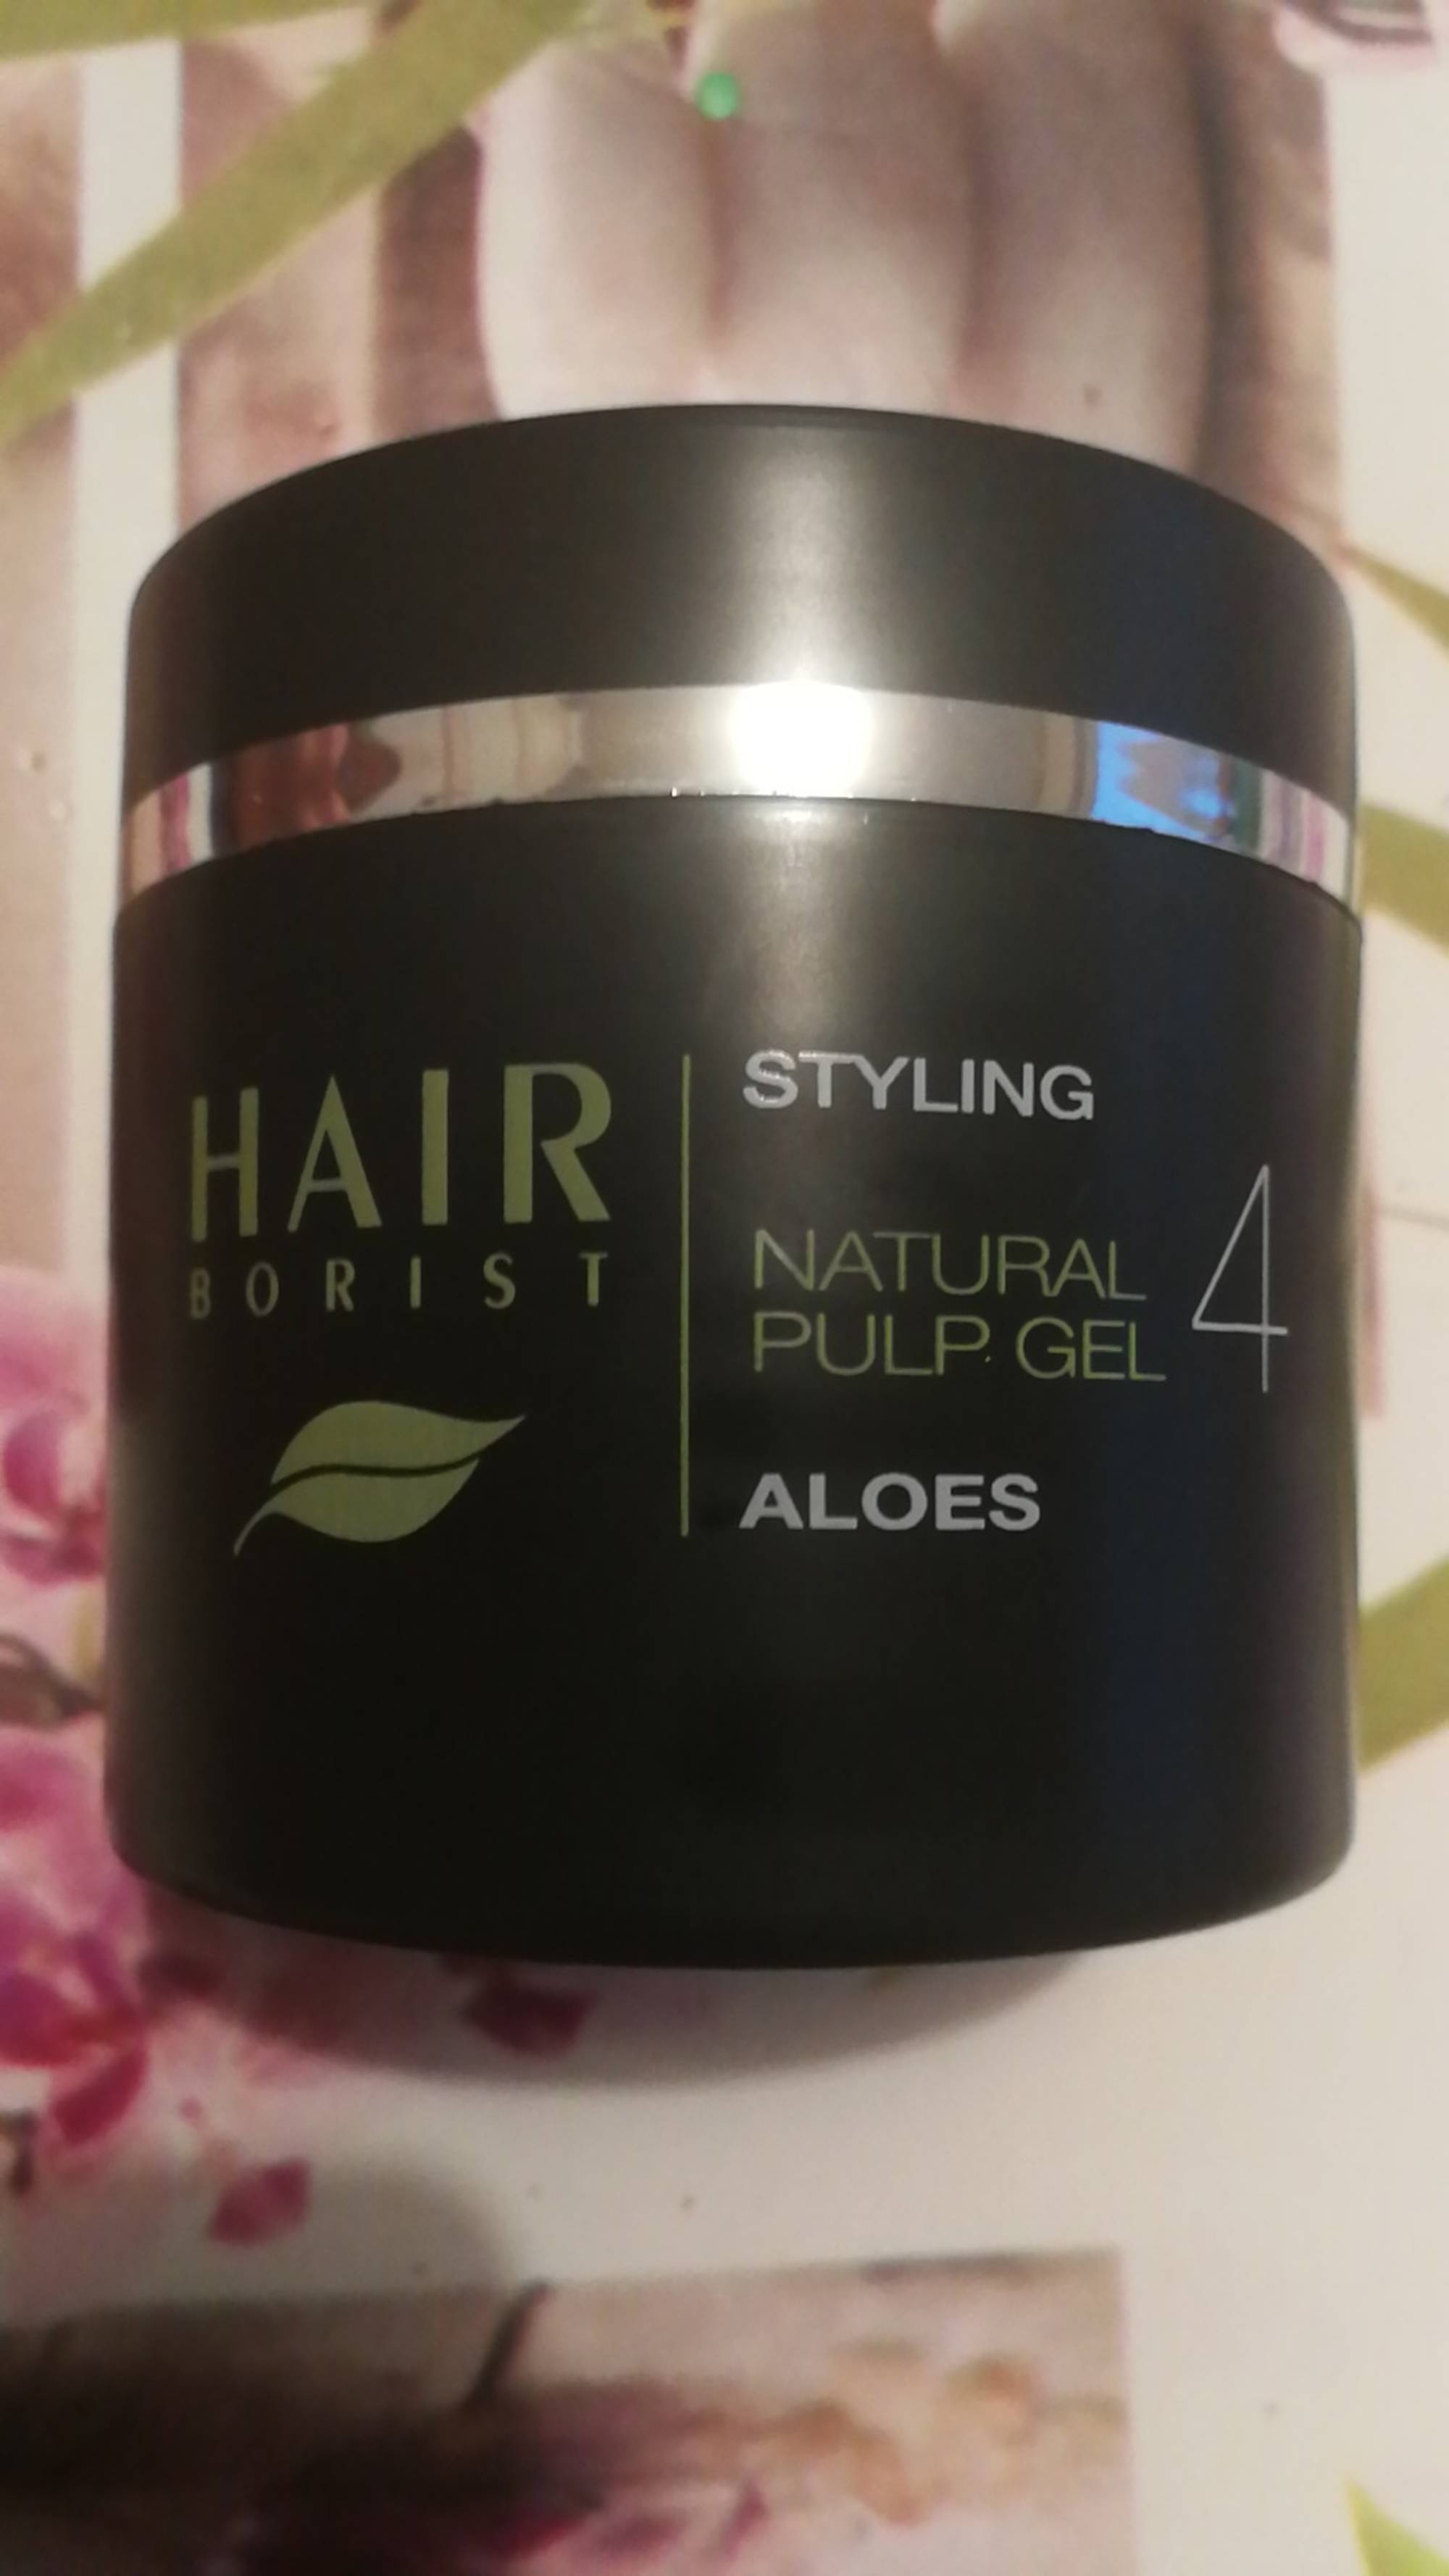 HAIR BORIST - Styling 4 aloes - Natural pulp gel